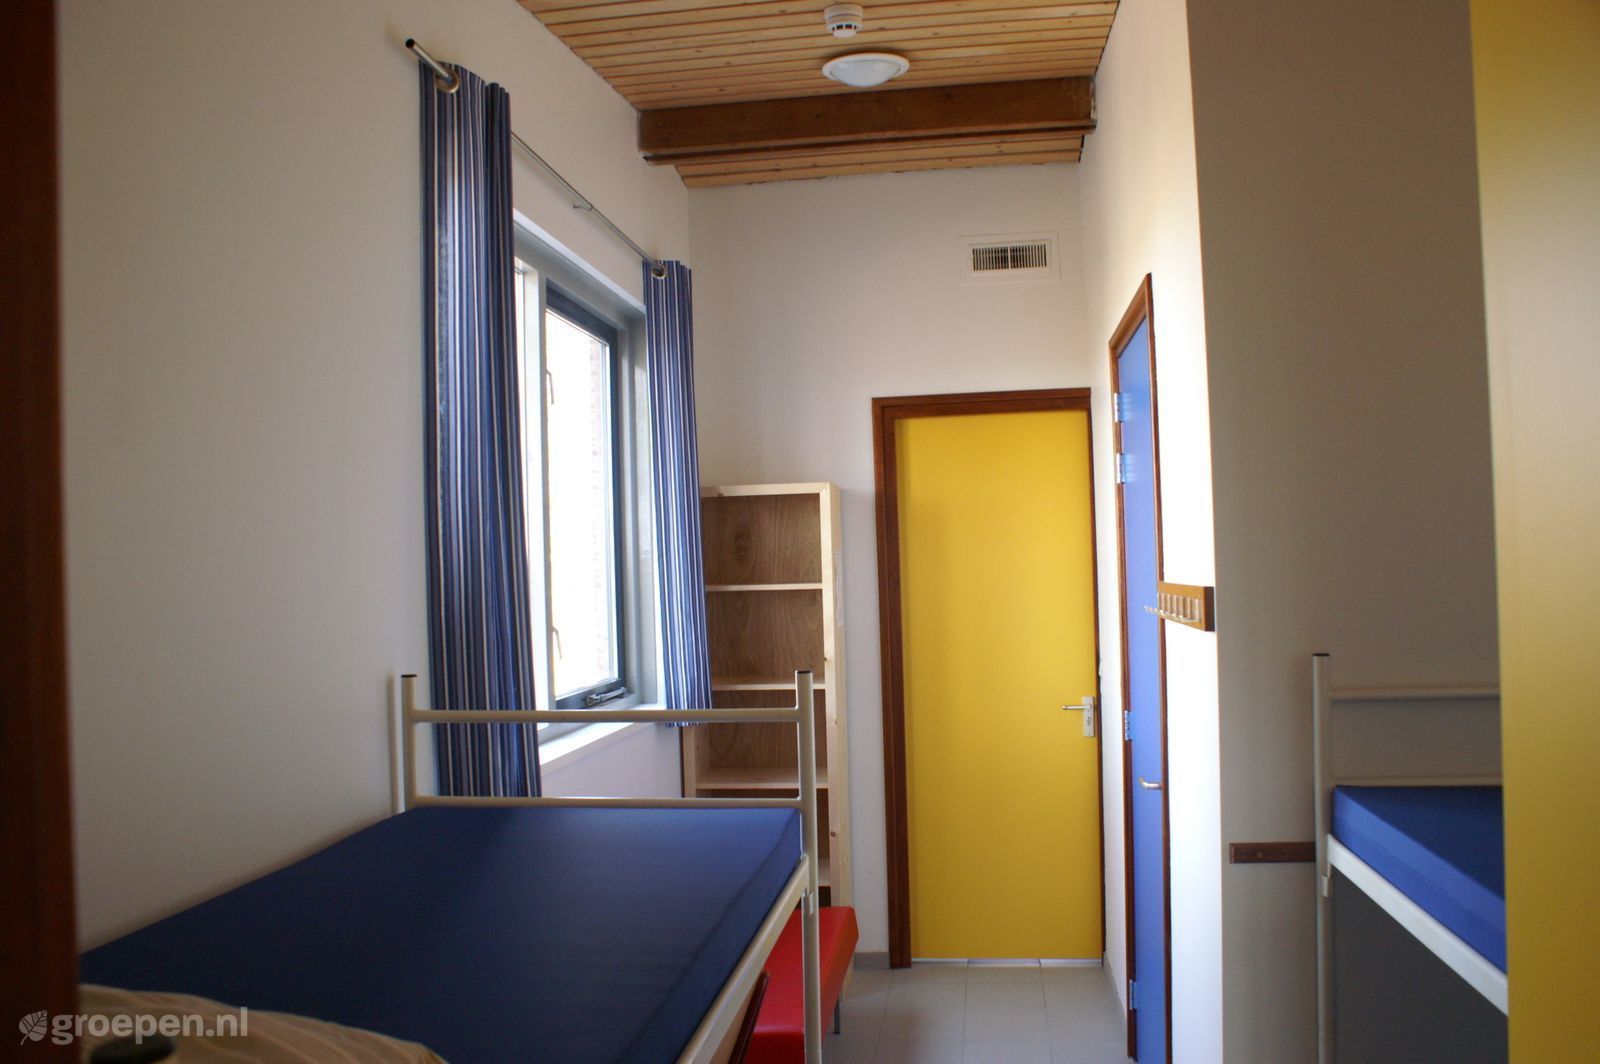 Group accommodation De koog